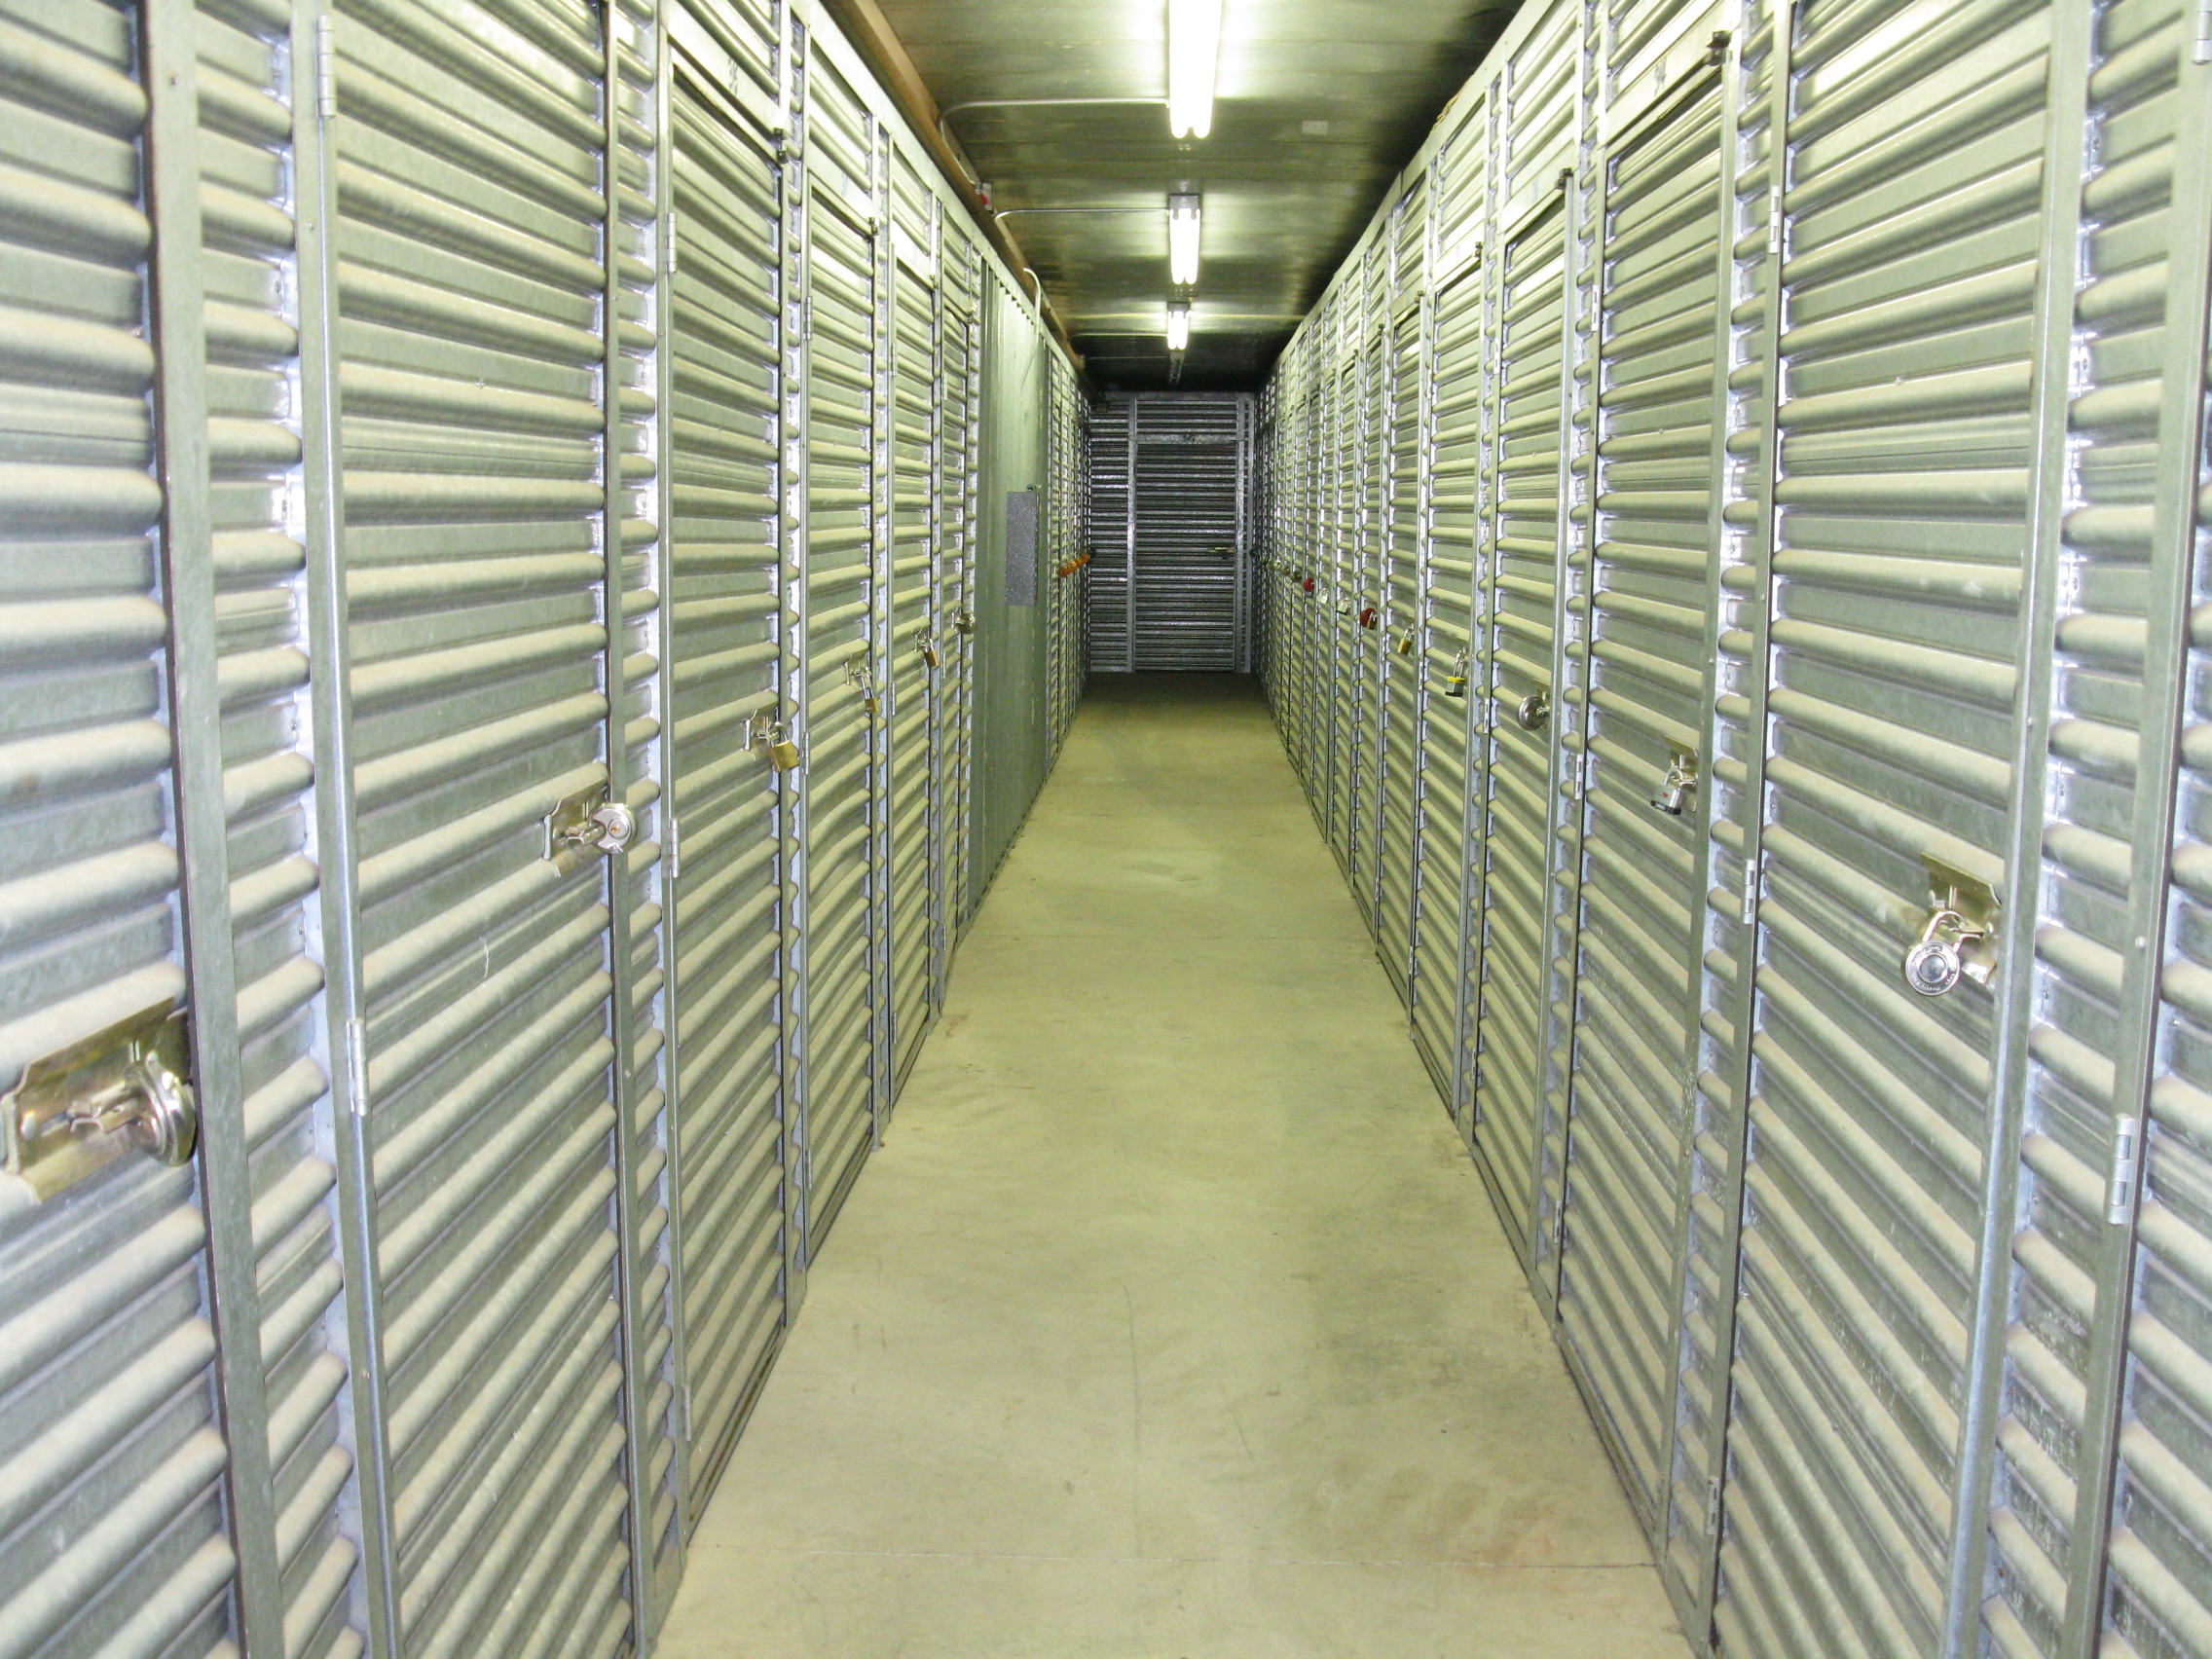 Sentry Storage on Folsom Blvd secure indoor storage units with well lit hallways